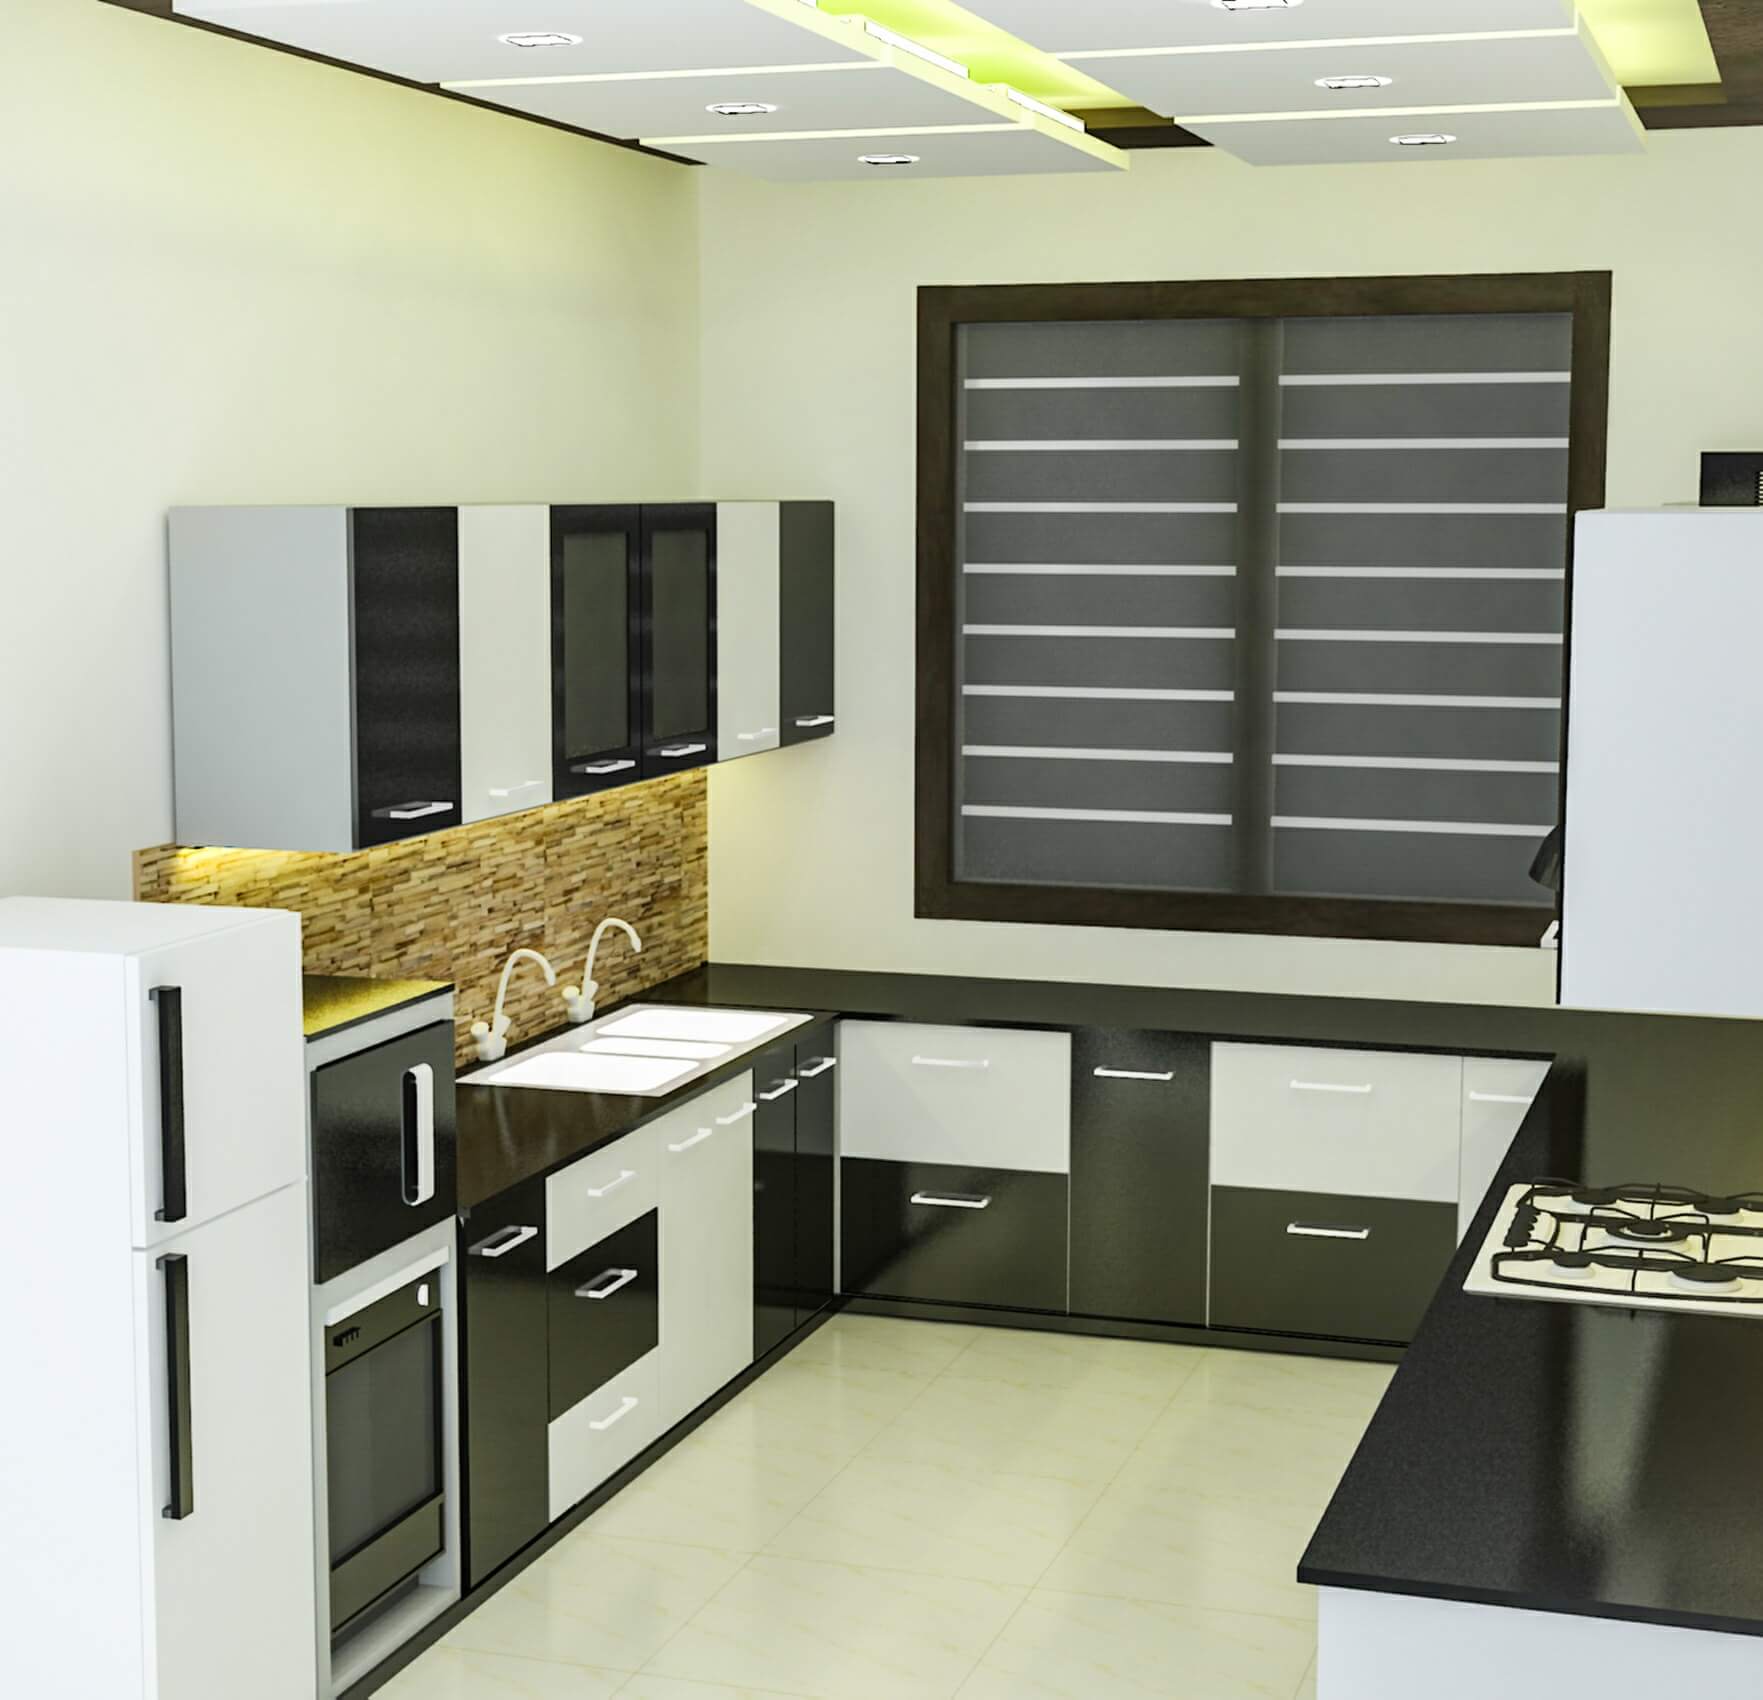 Interior design for modern kitchens